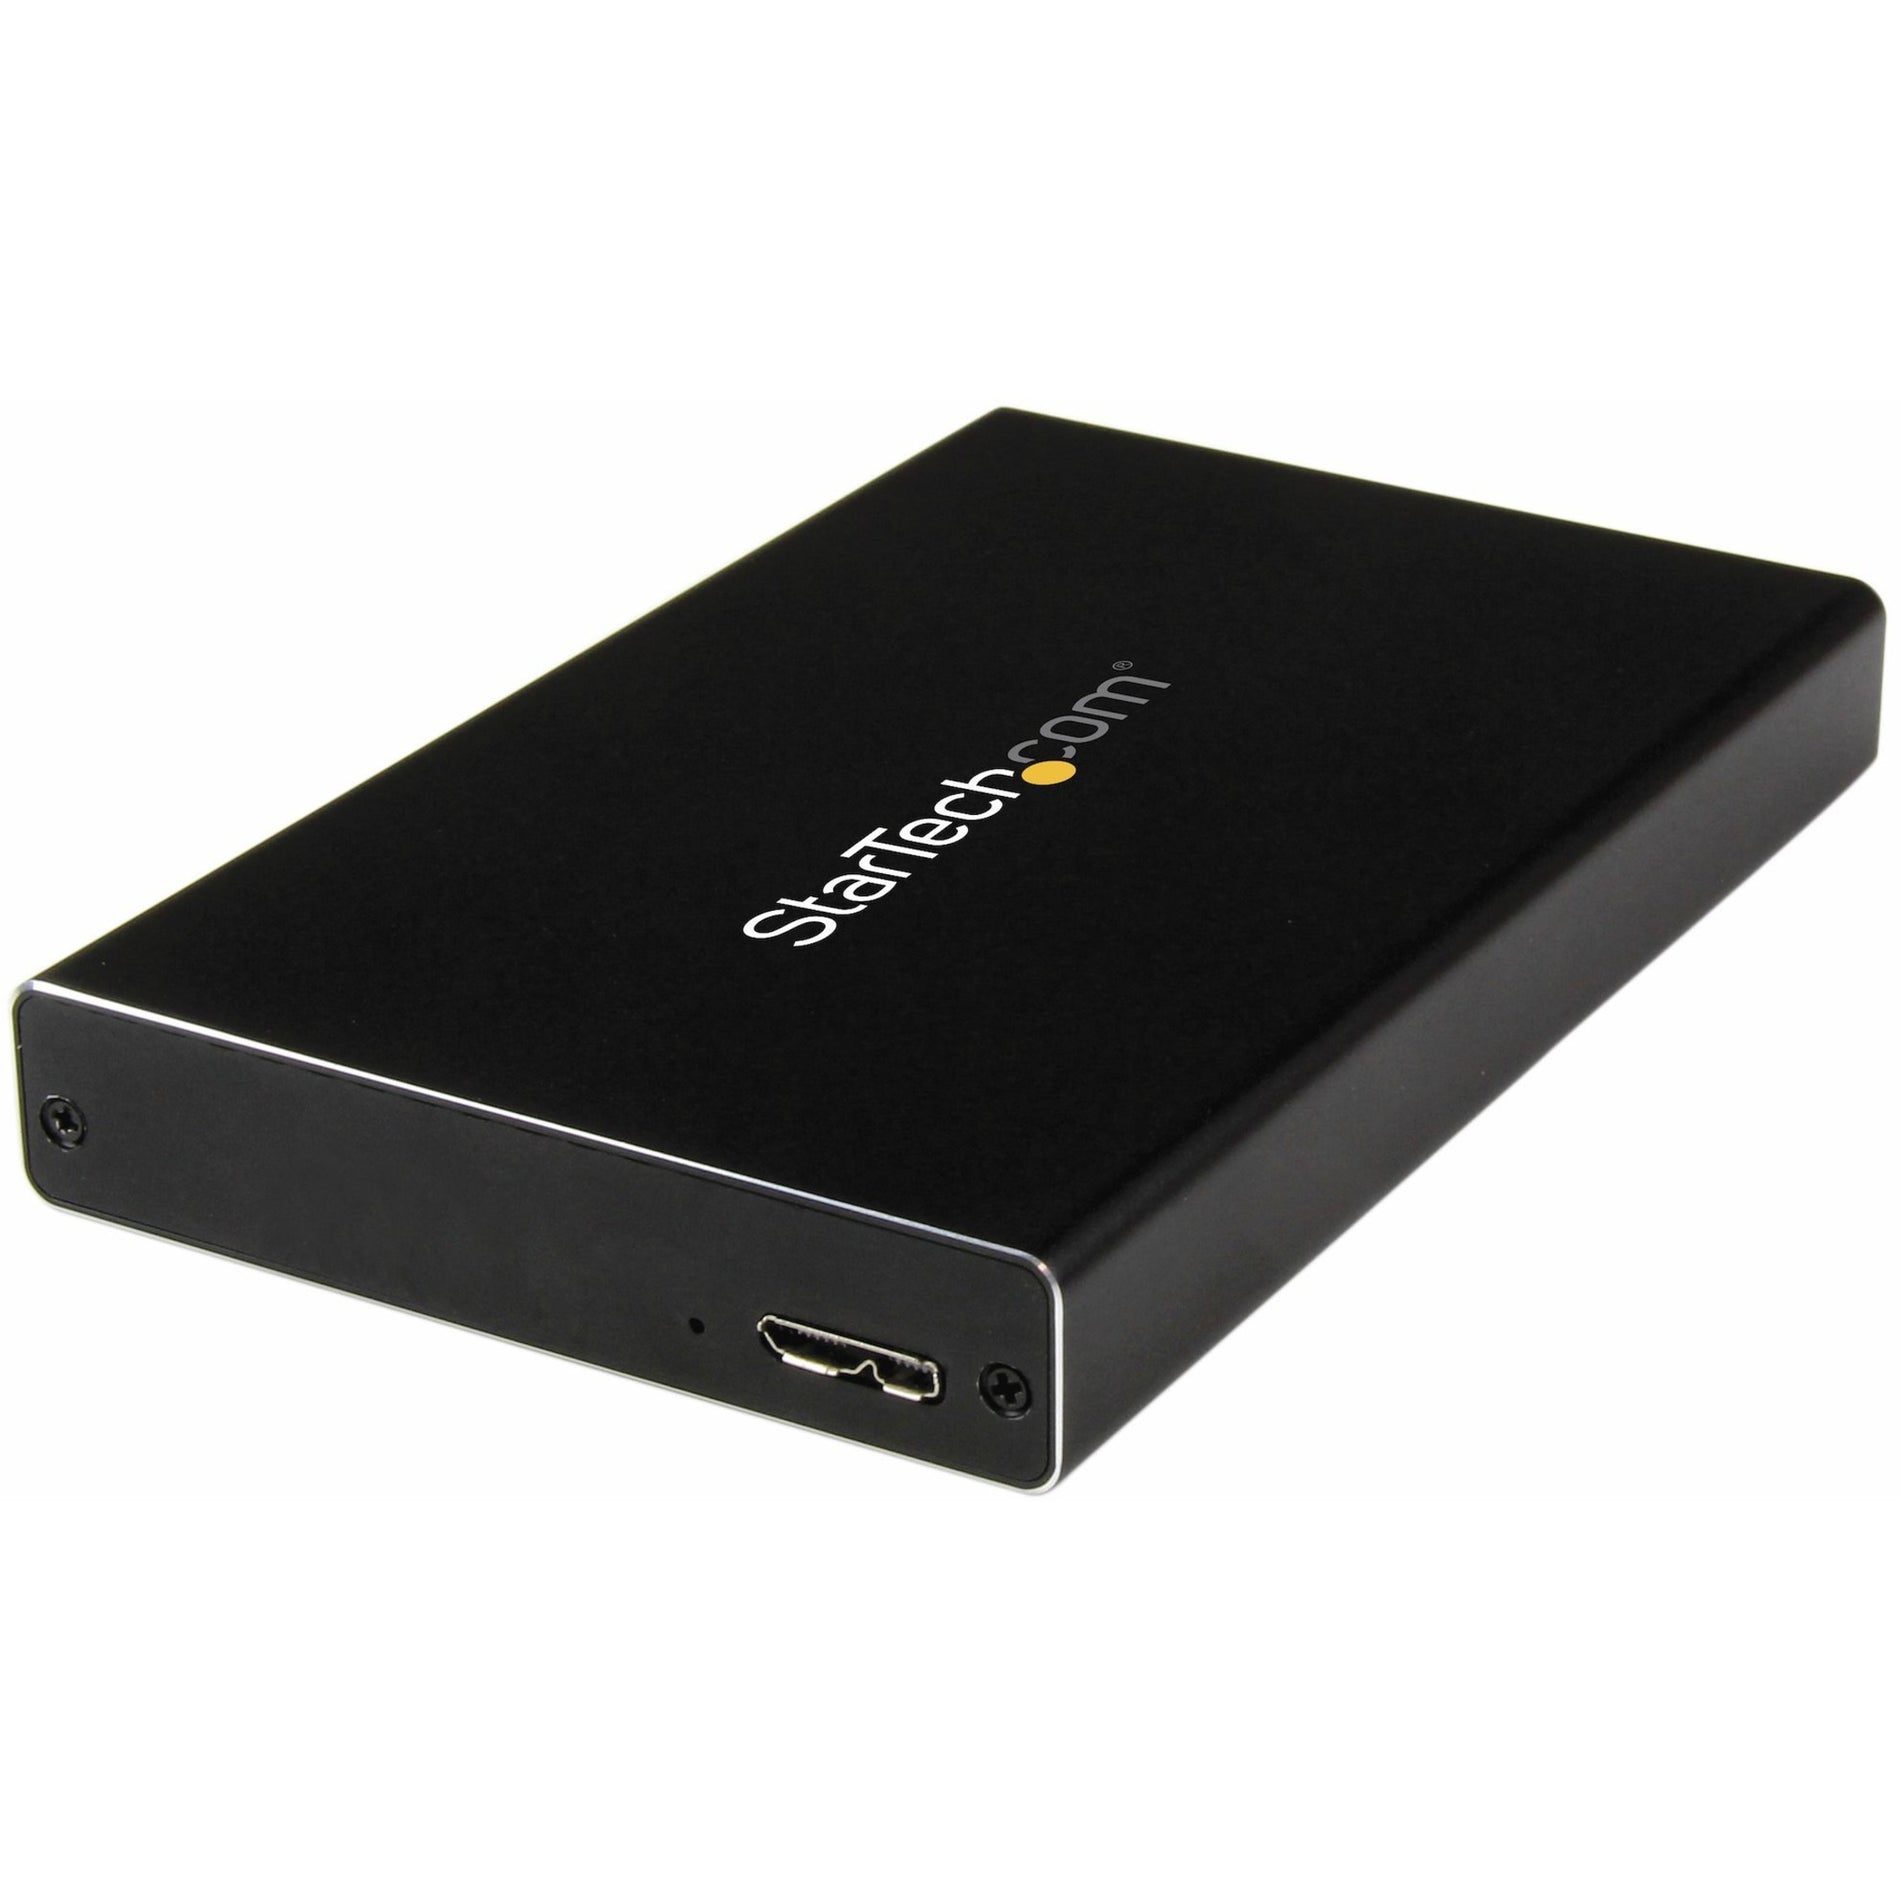 StarTech.com UNI251BMU33 USB 3.0 Universal 2.5in SATA III or IDE Hard Drive Enclosure - Portable External SSD / HDD, UASP Support